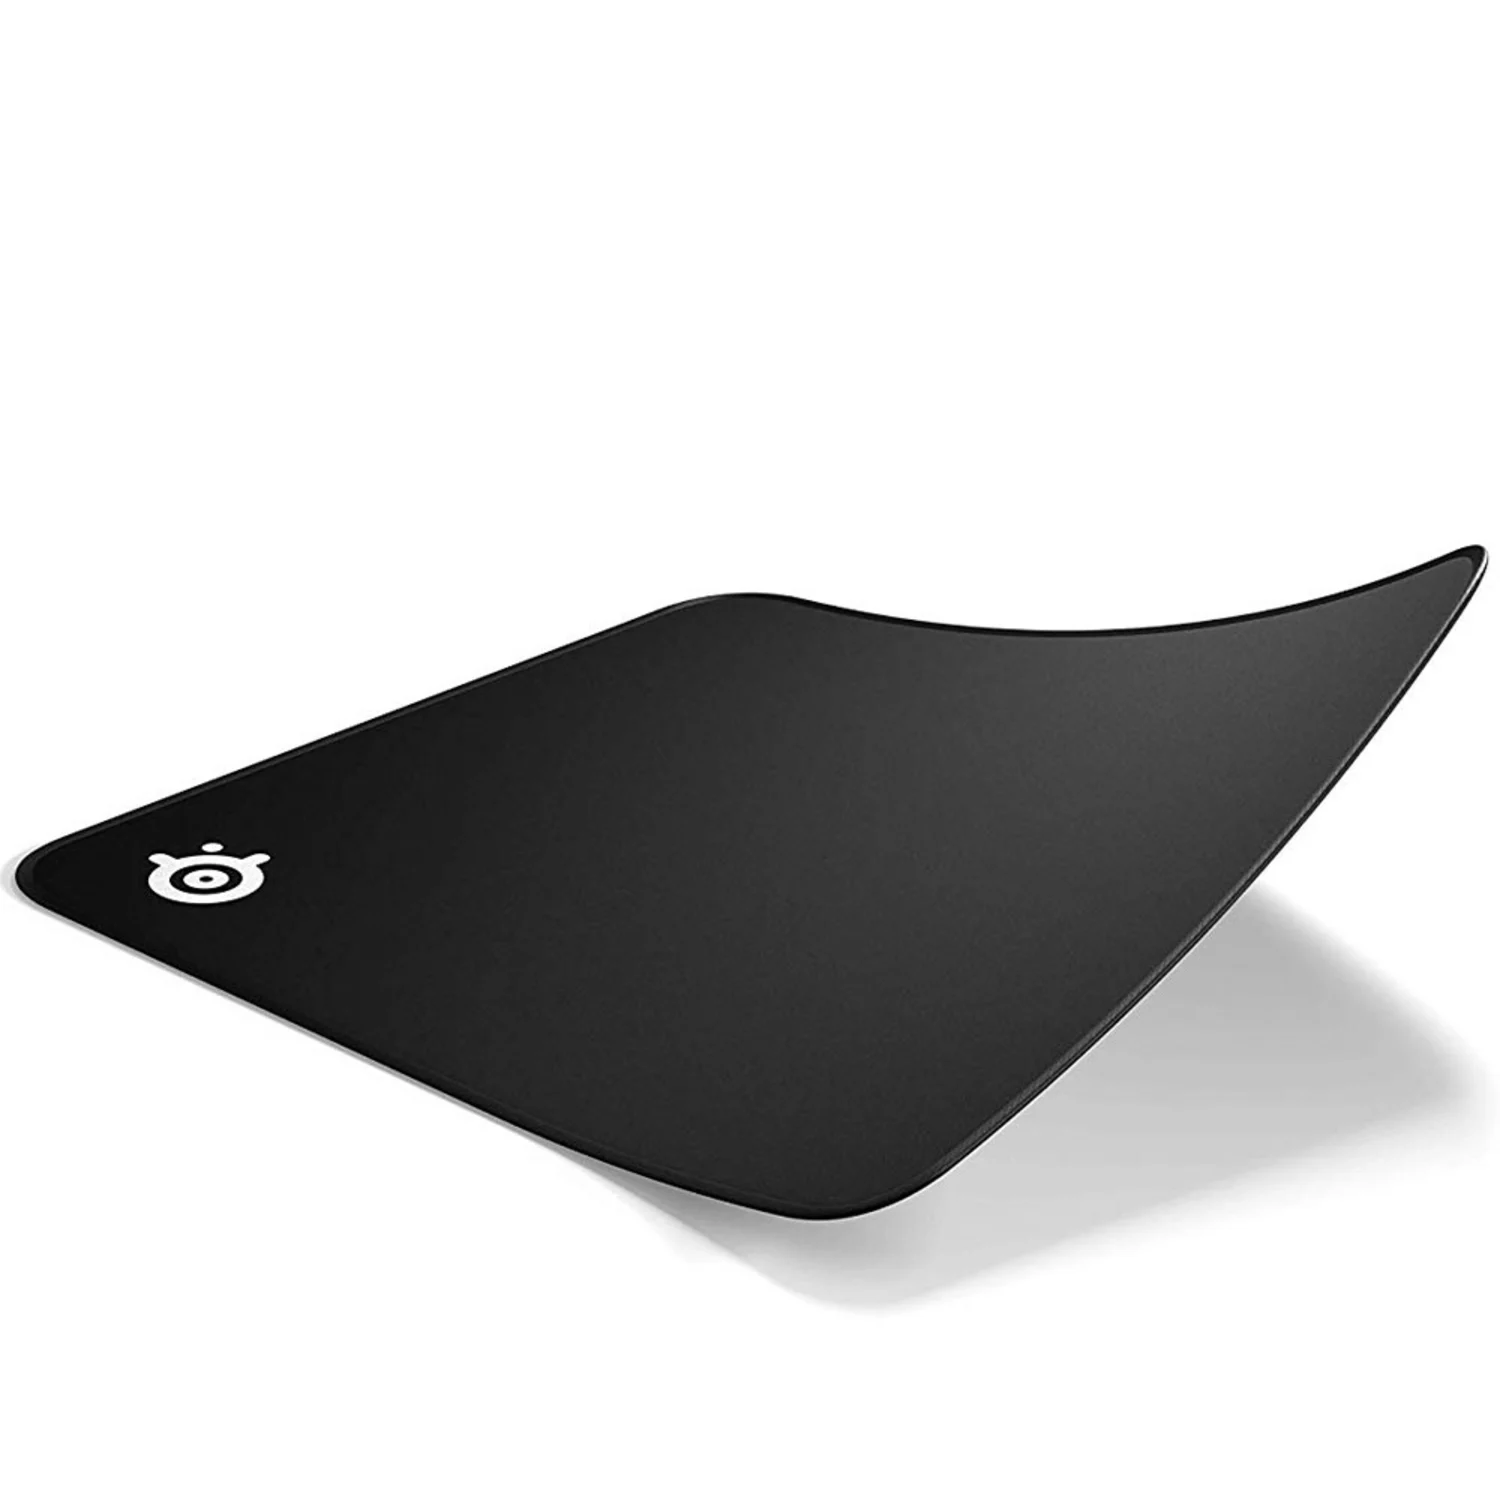 Mousepad Steelseries Qck Edge Large - (63823)